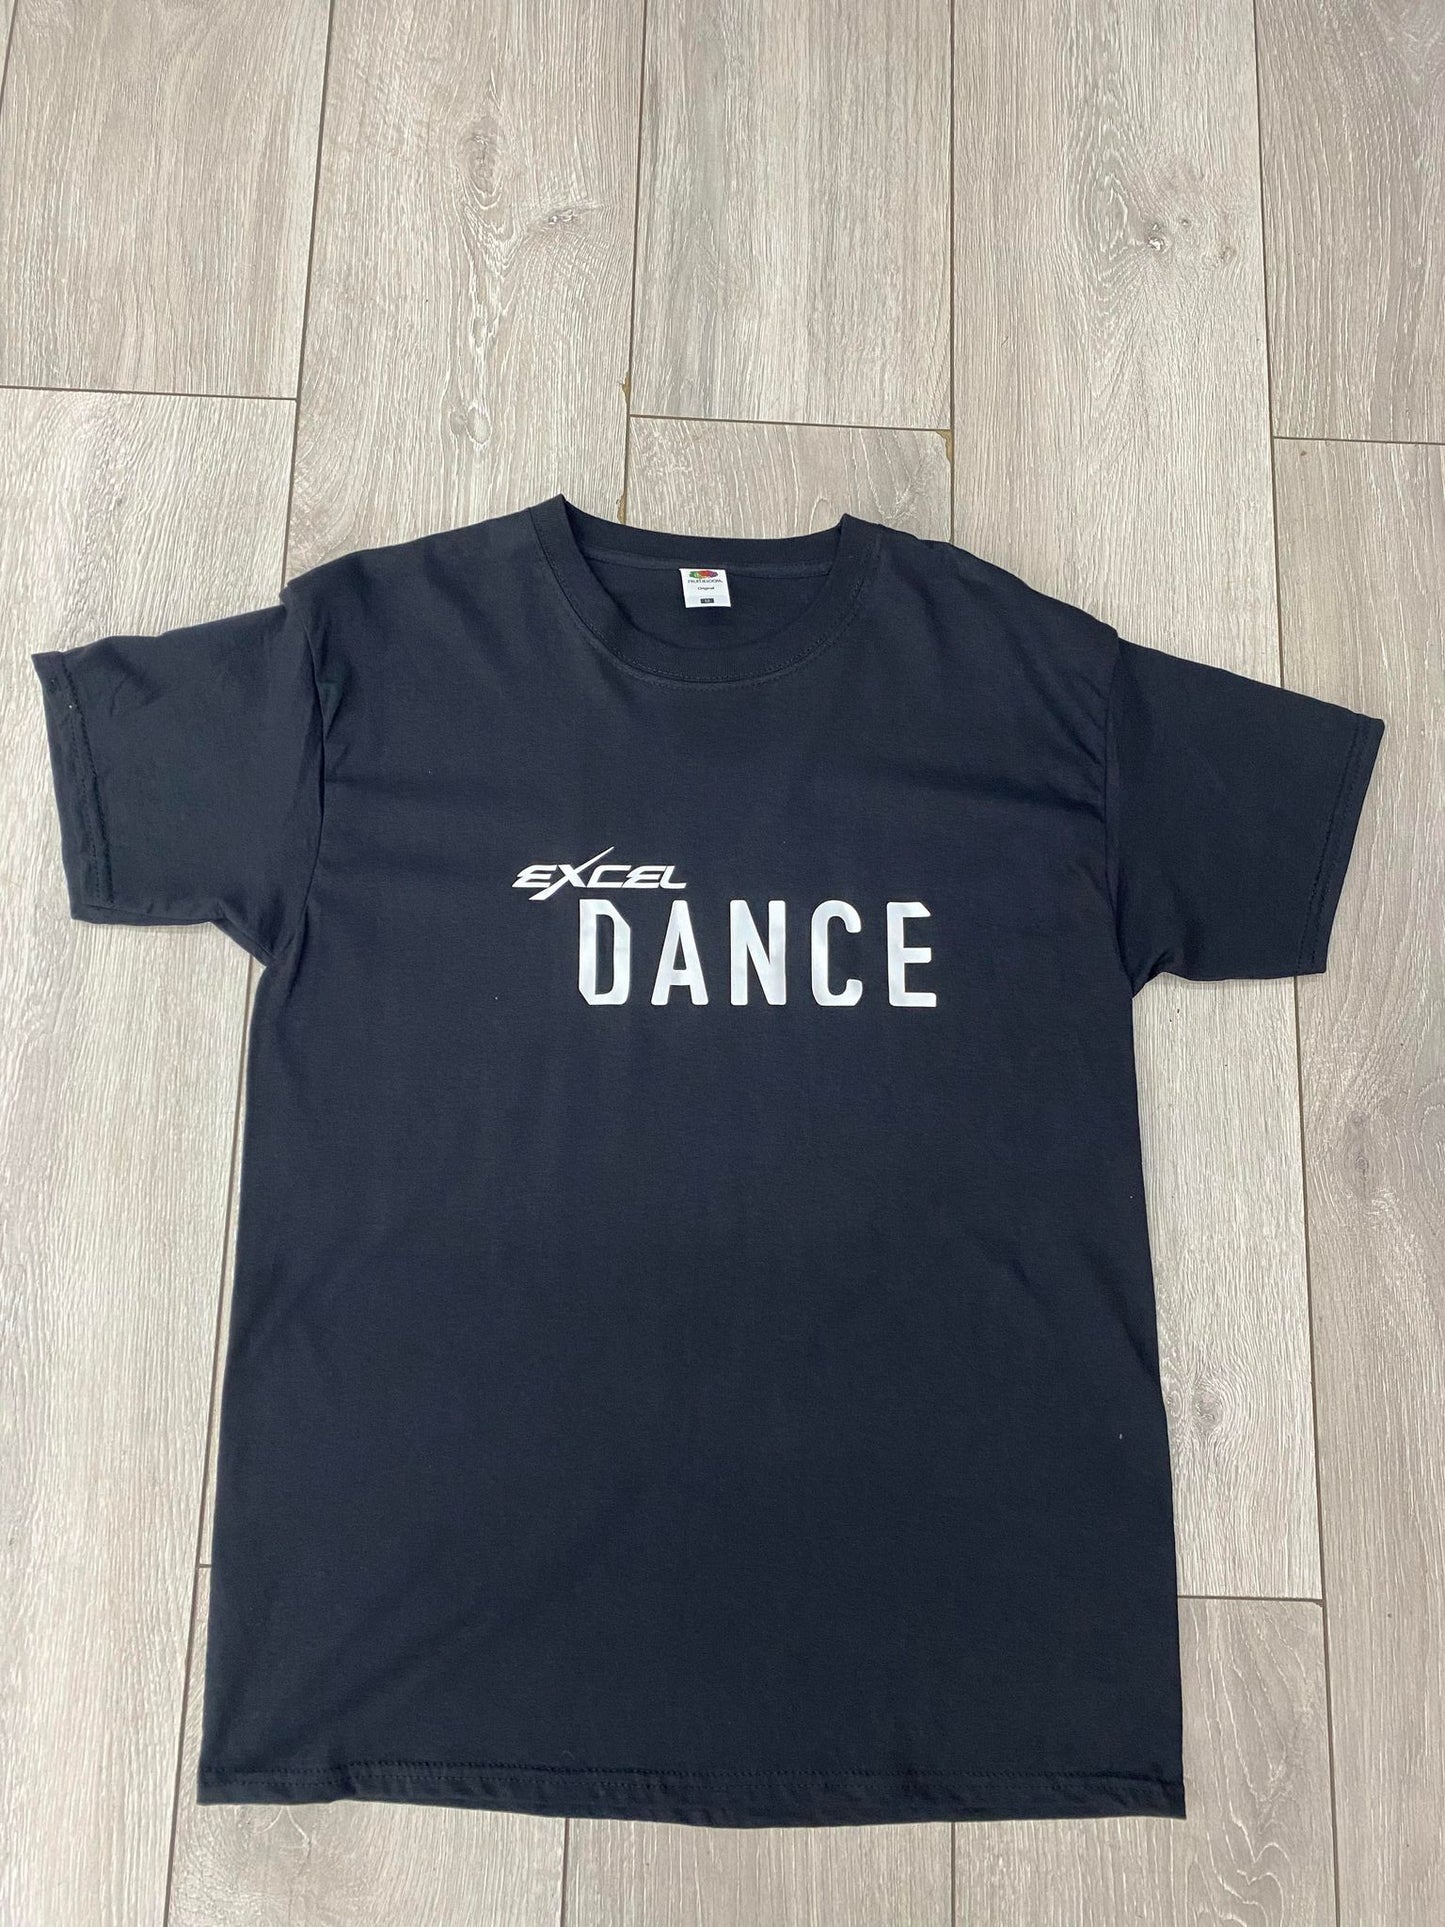 Excel Dance T-shirt